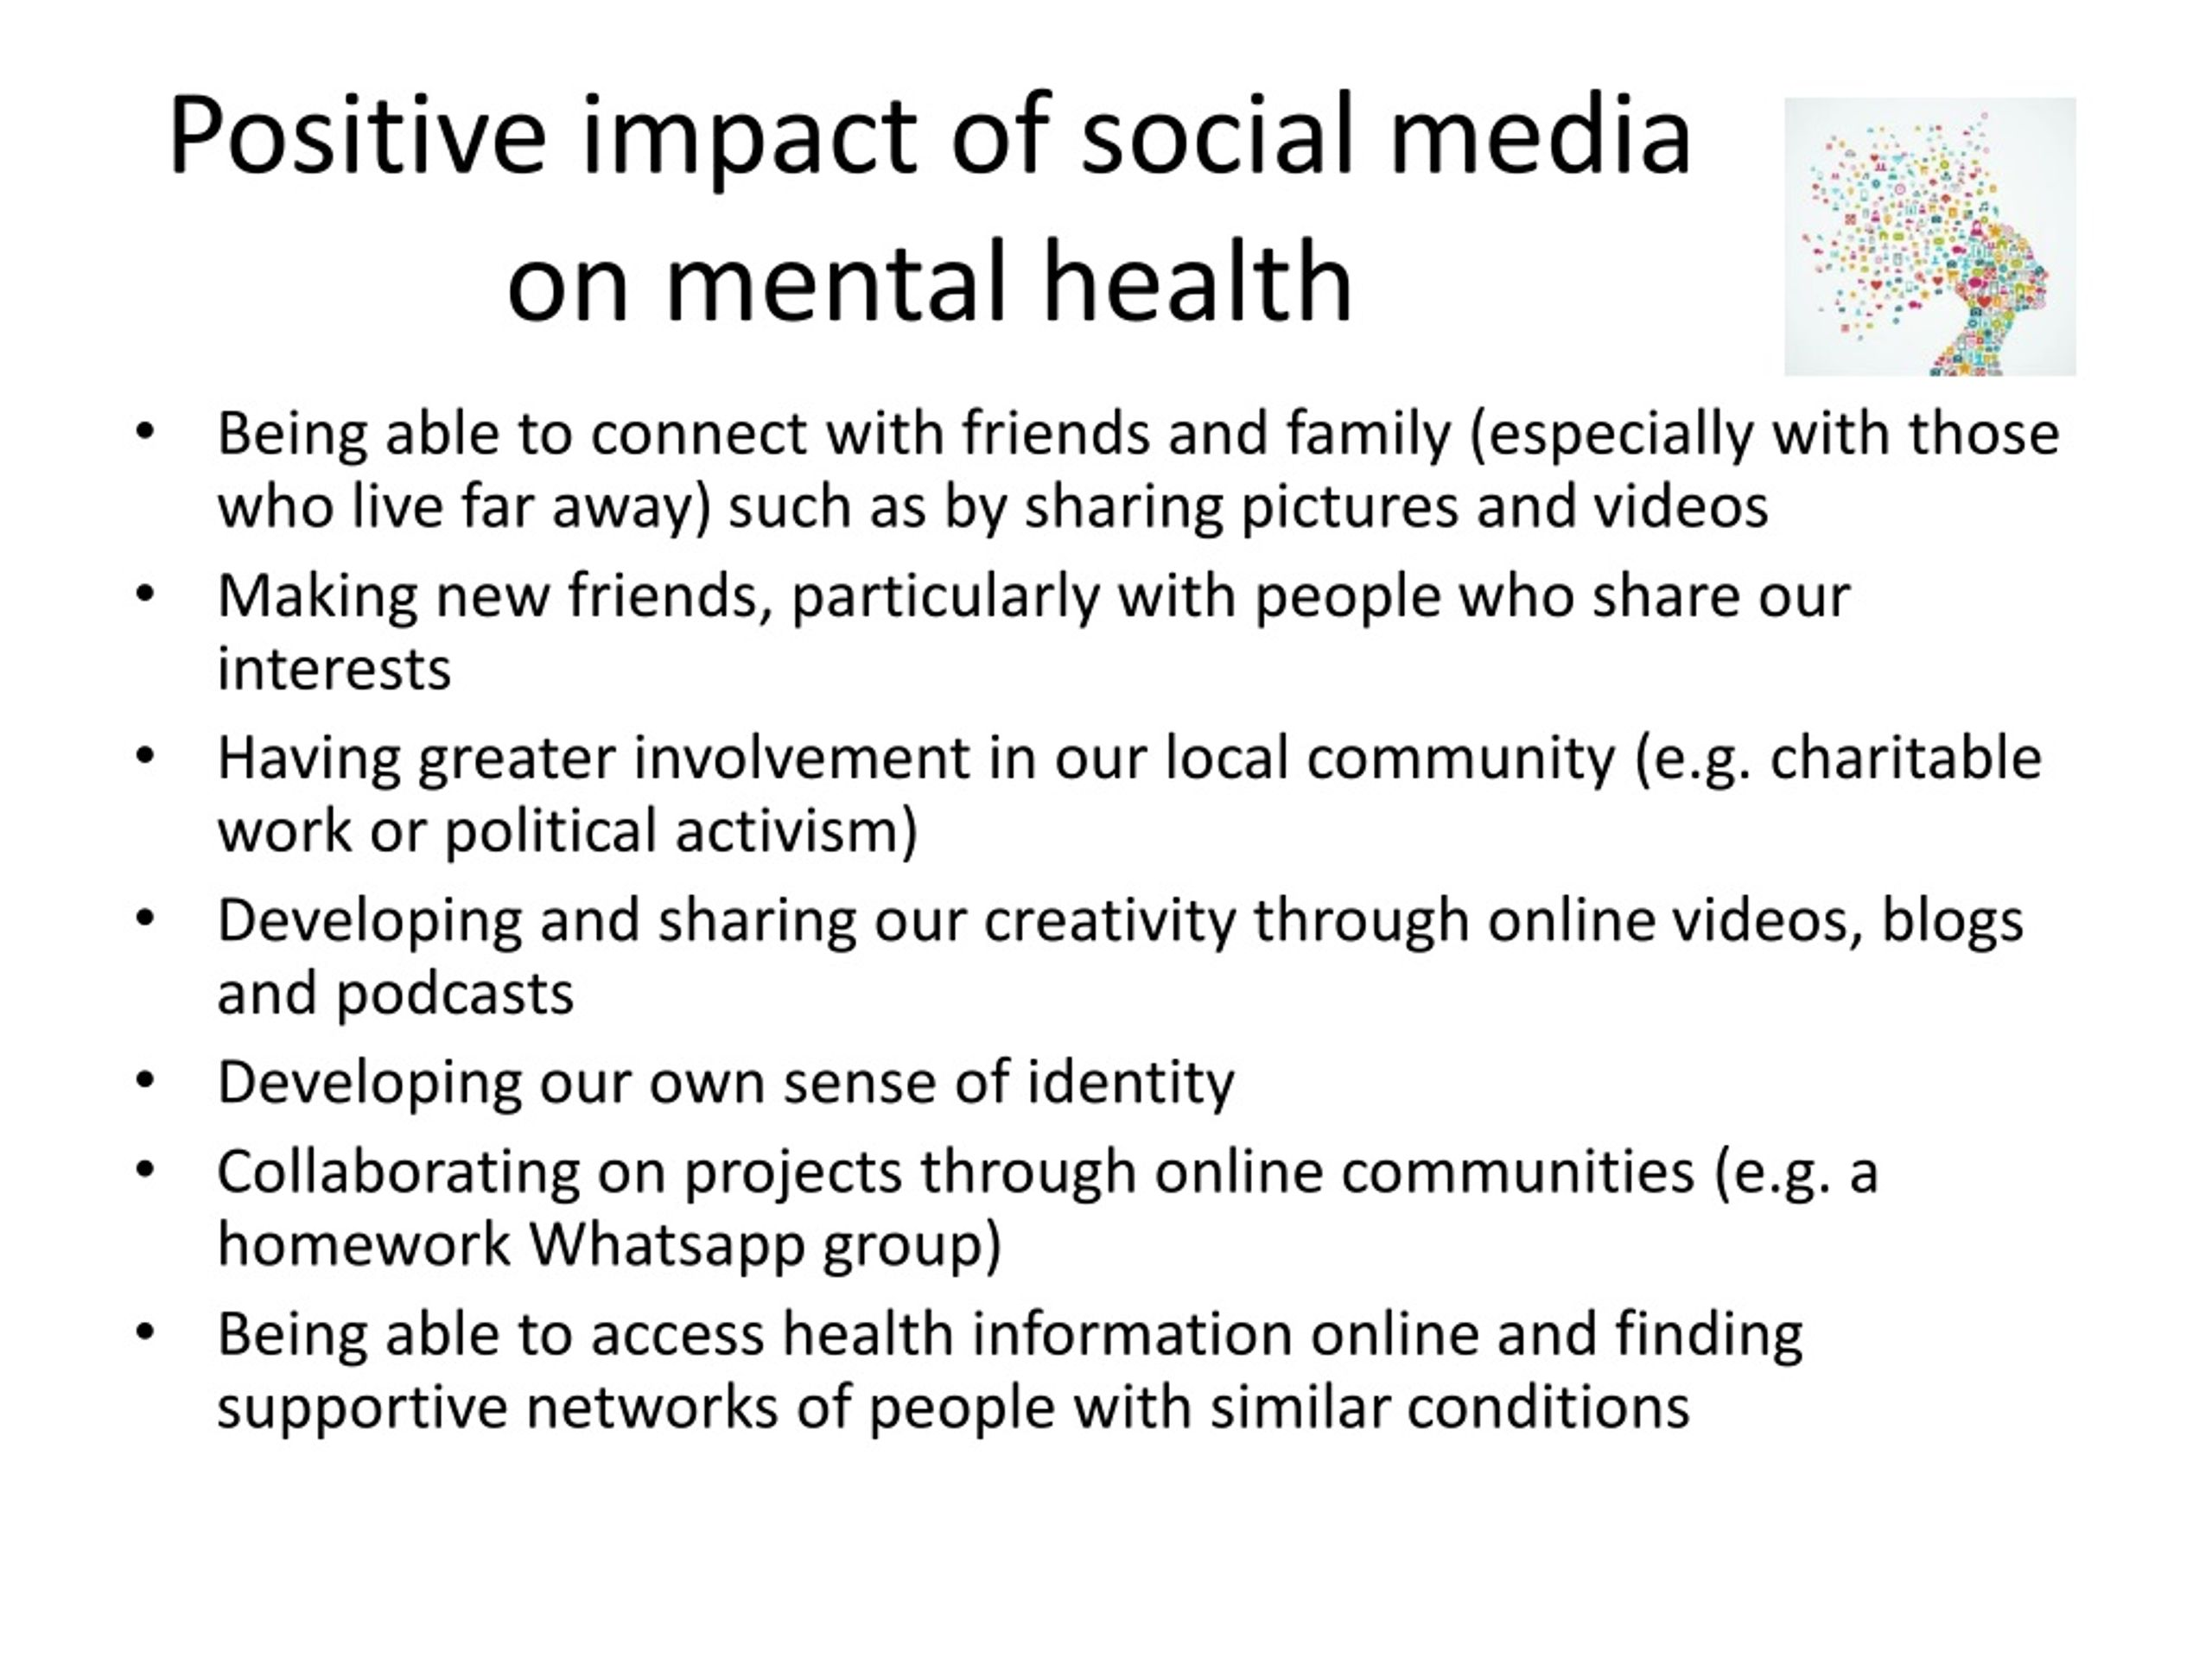 social media impacting mental health essay